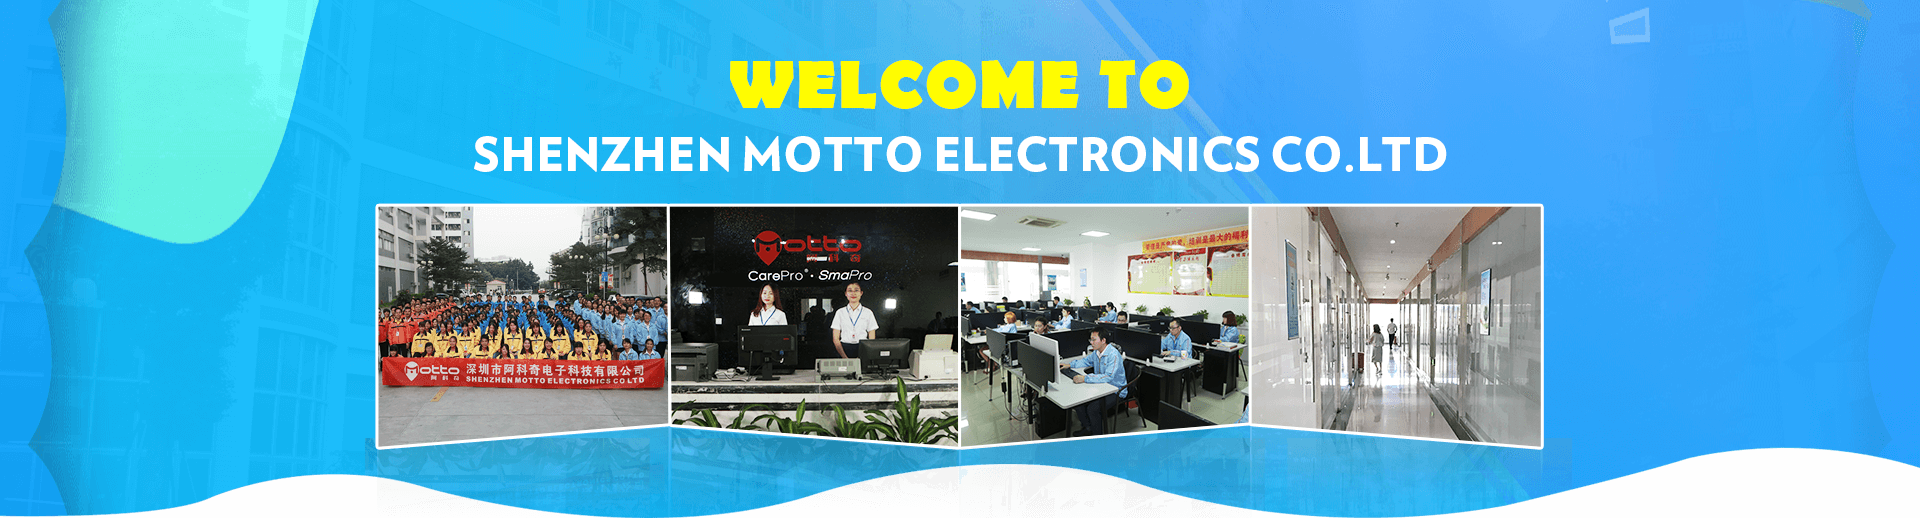 Shenzhen Motto Electronics Company